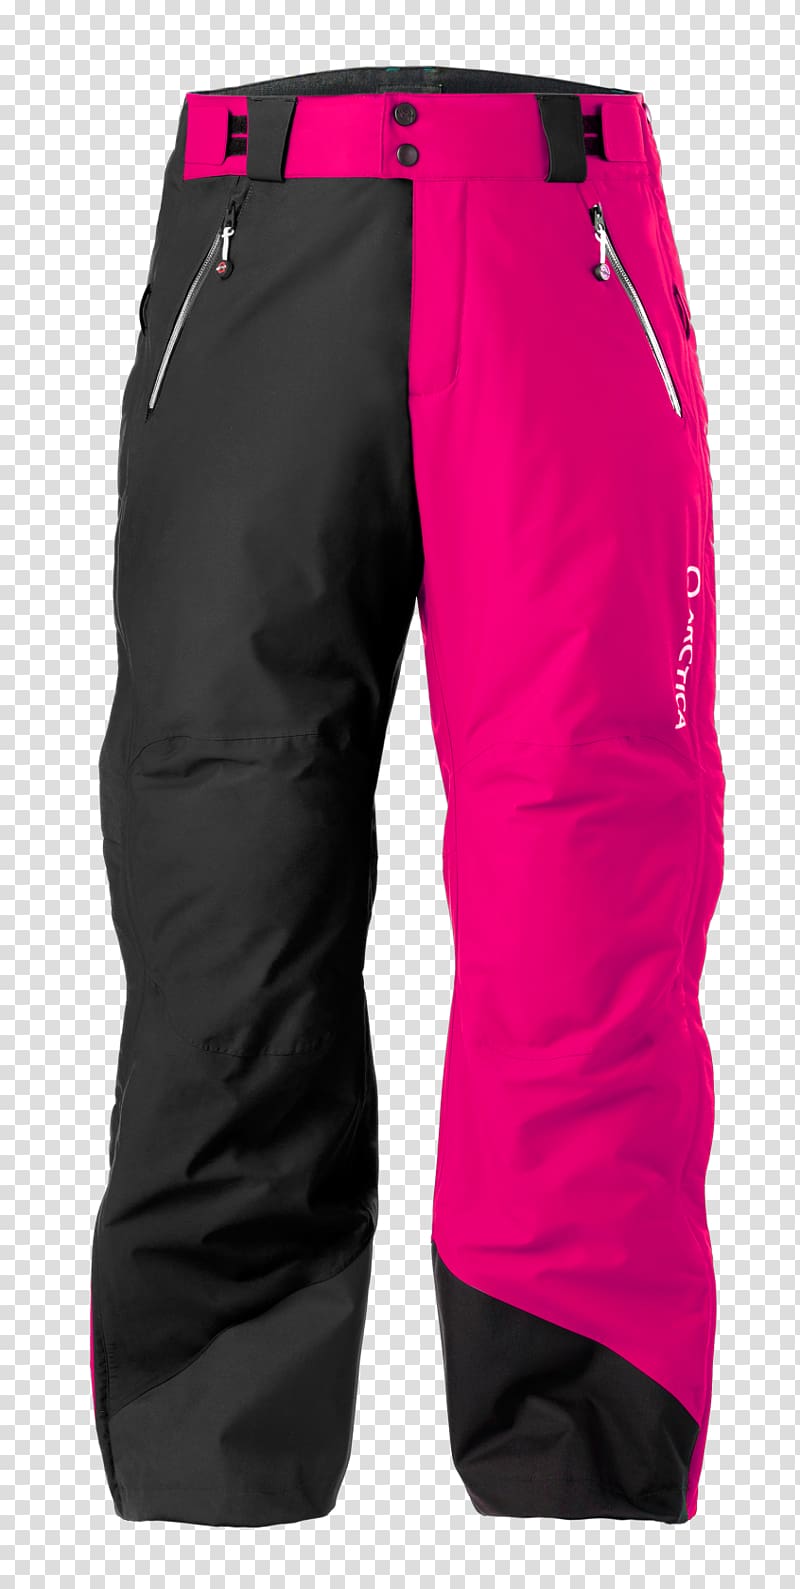 Pants Clothing Zipper Pink Shorts, pants zipper transparent background PNG clipart